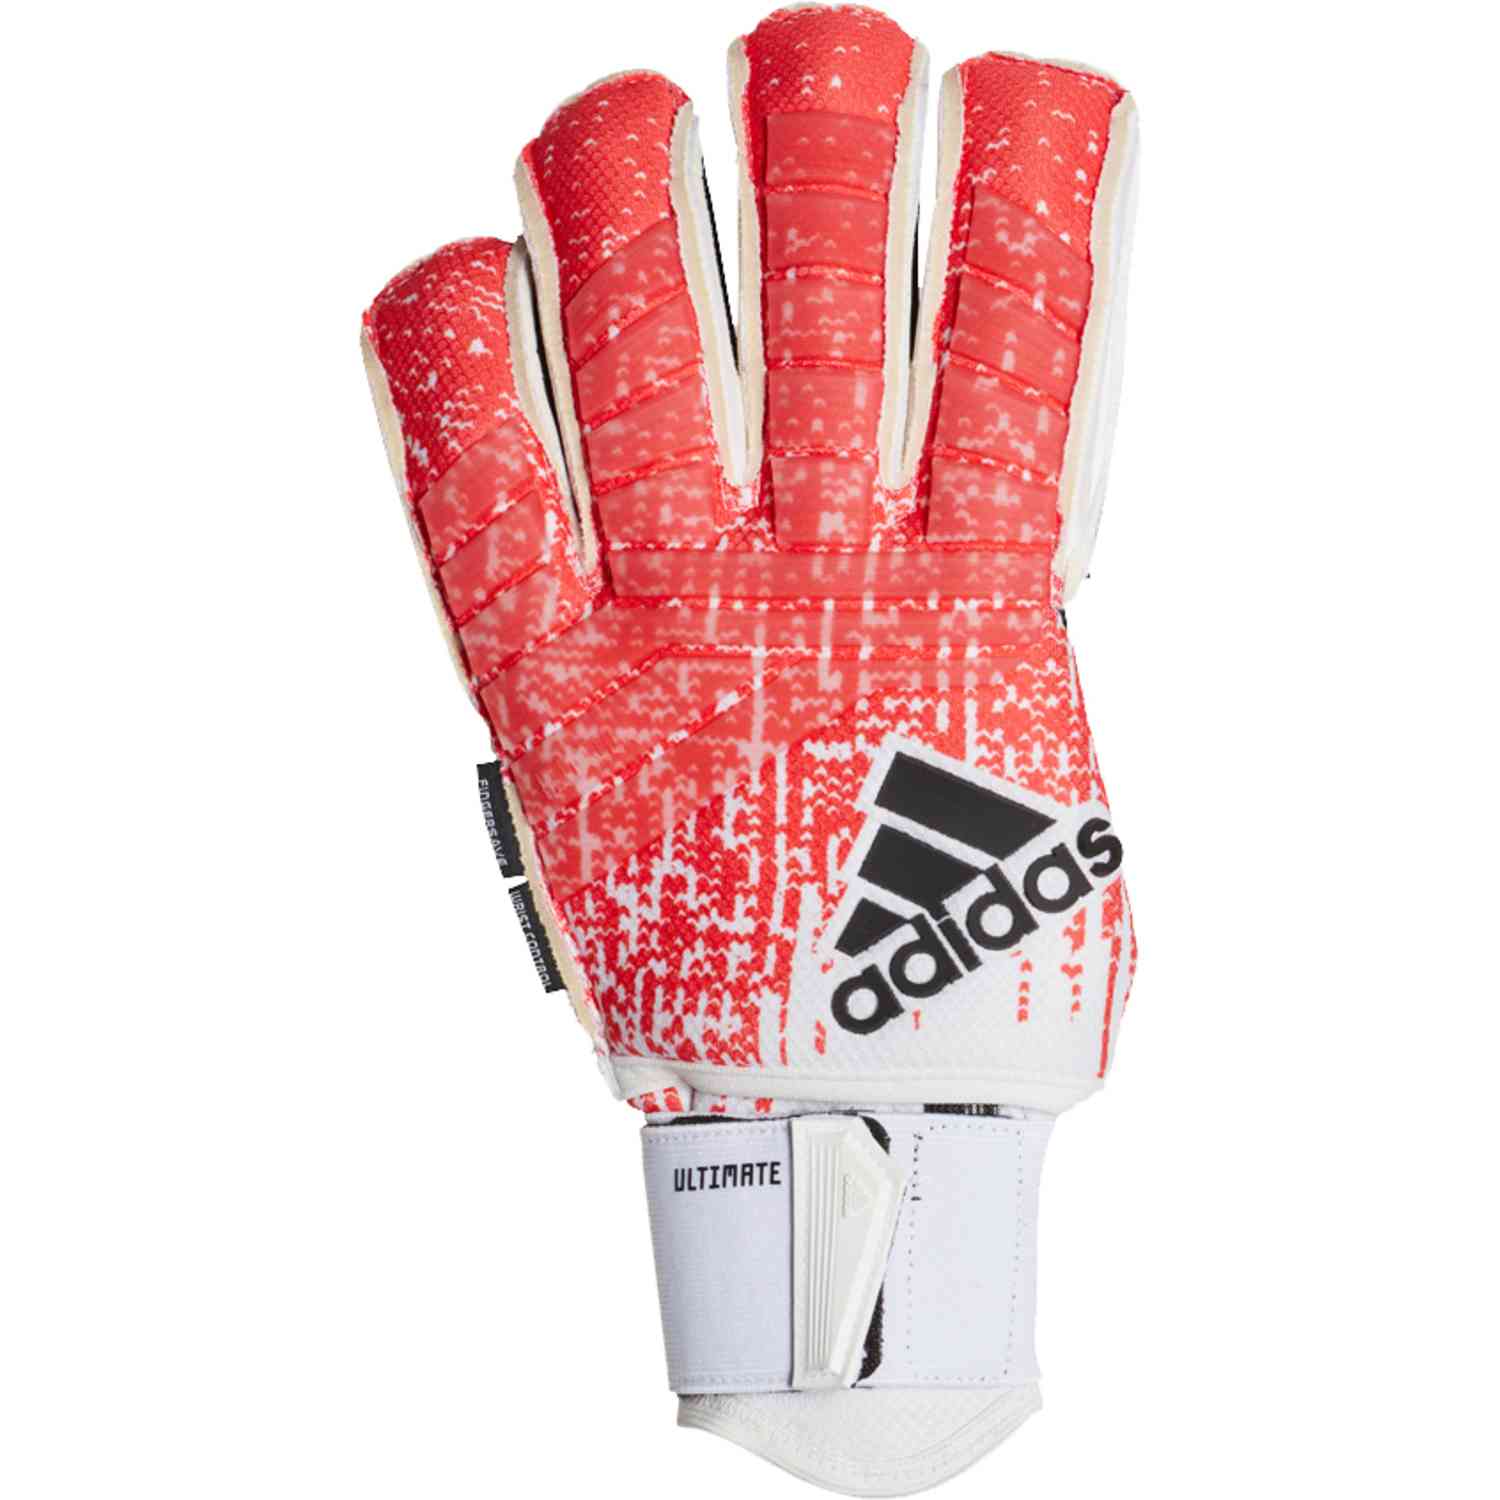 adidas predator ultimate goalkeeper gloves review